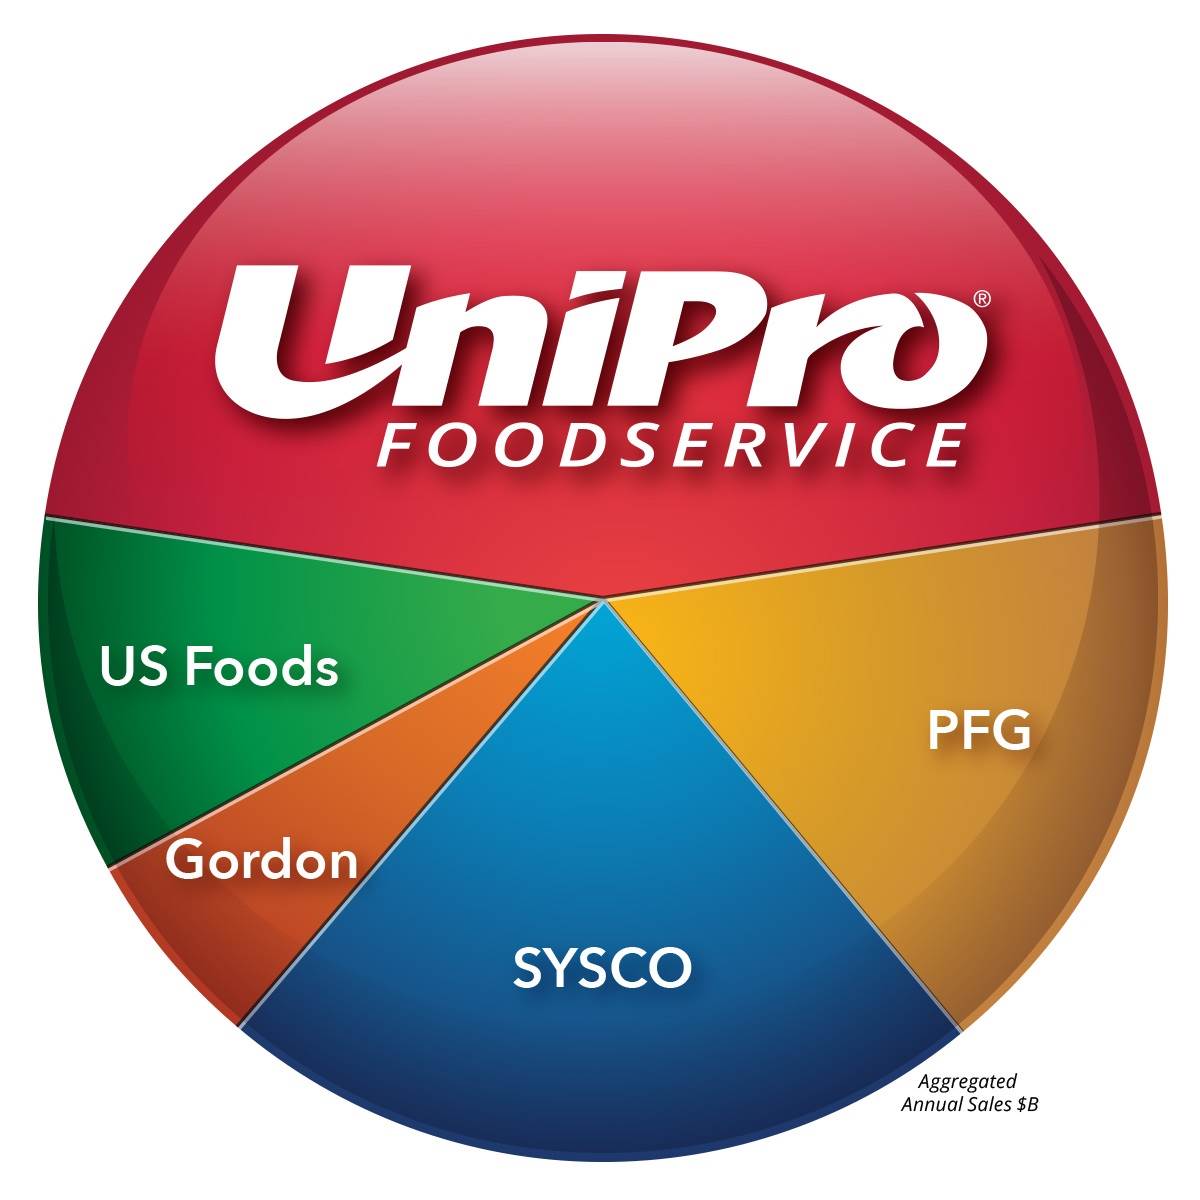 Unipro's market share compared to competitors